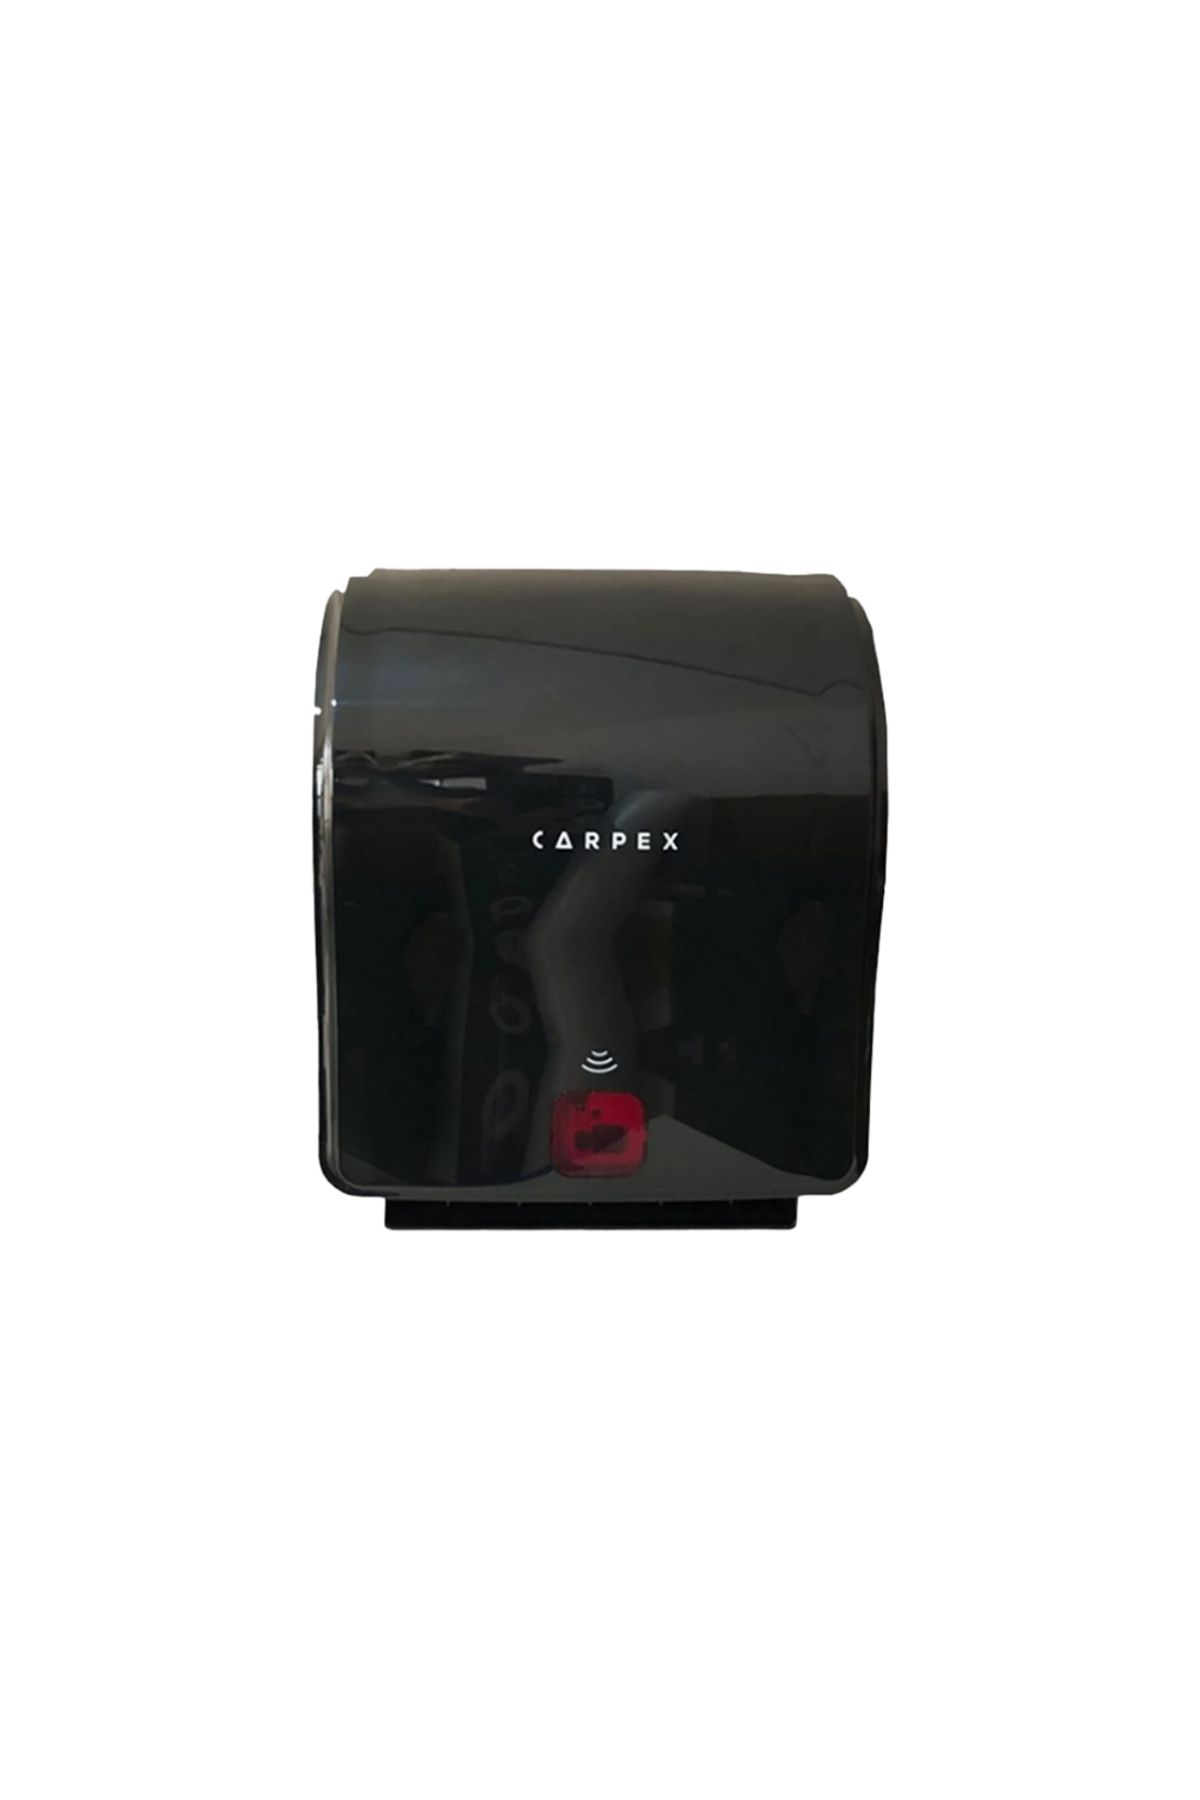 Carpex Optima Otomatik Havlu Dispenseri Siyah